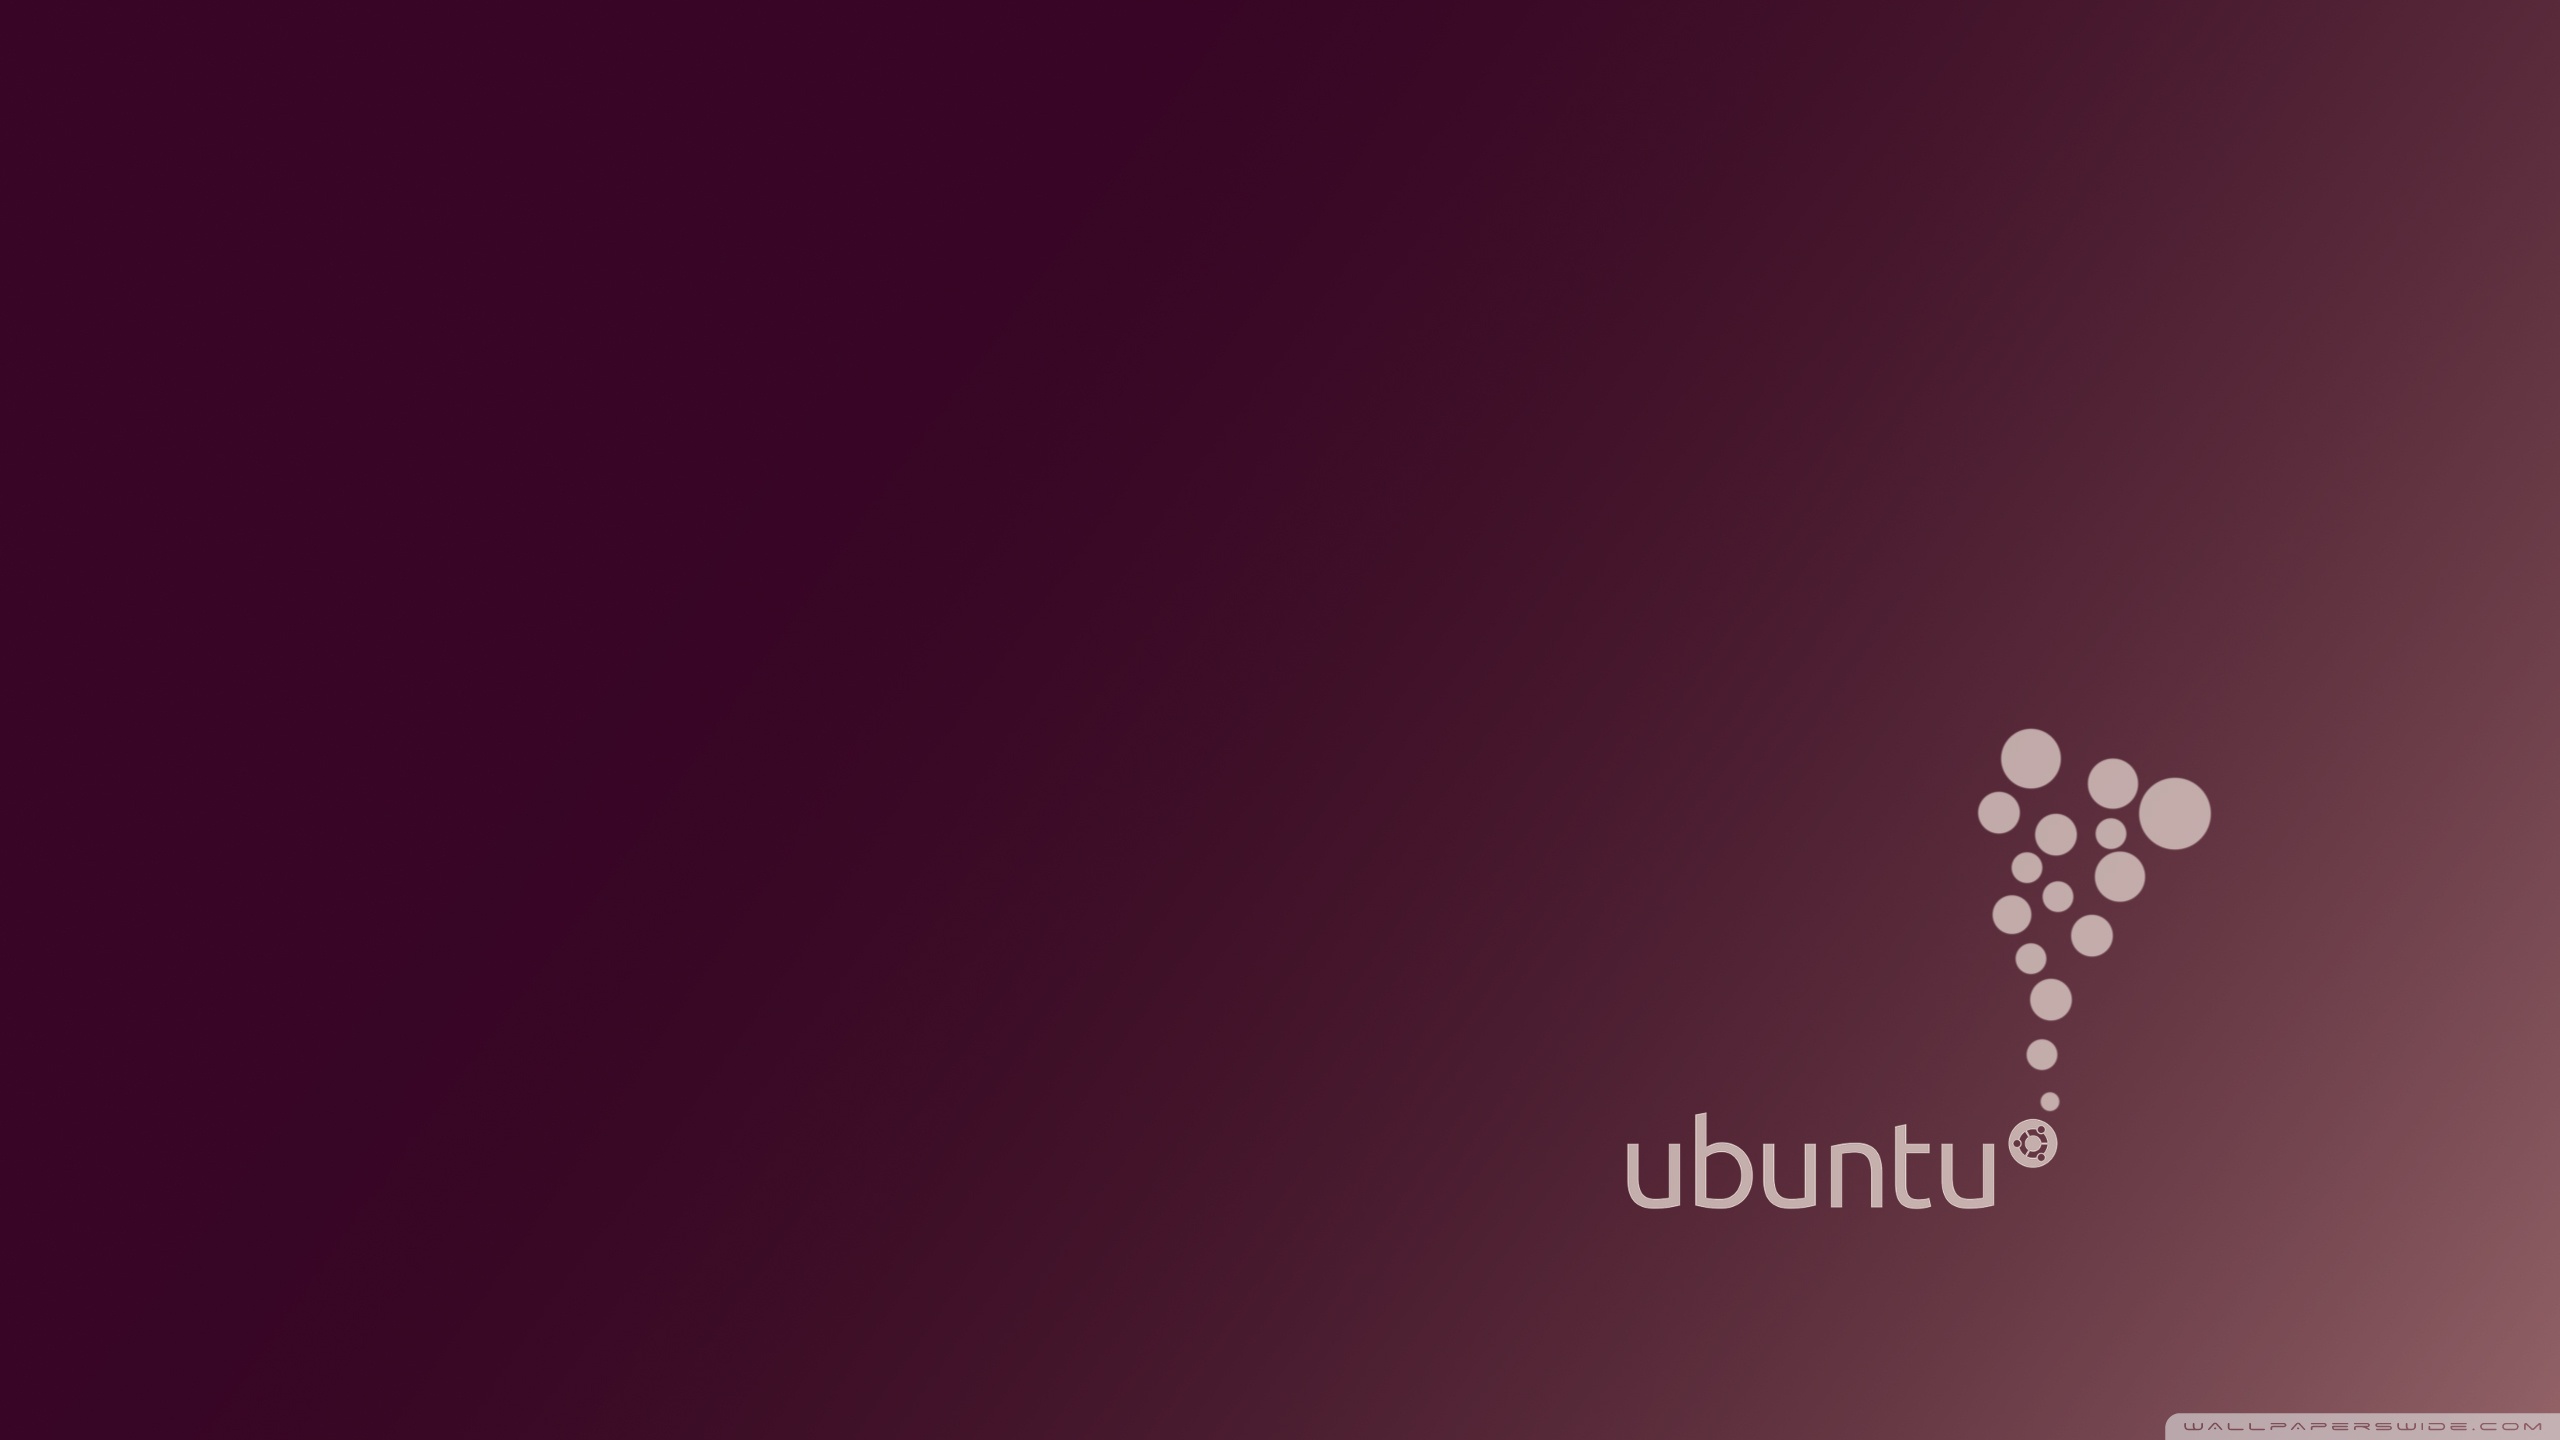 Linux Ubuntu Ultra Hd Desktop Background Wallpaper For 4k Uhd Tv Multi Display Dual Monitor Tablet Smartphone